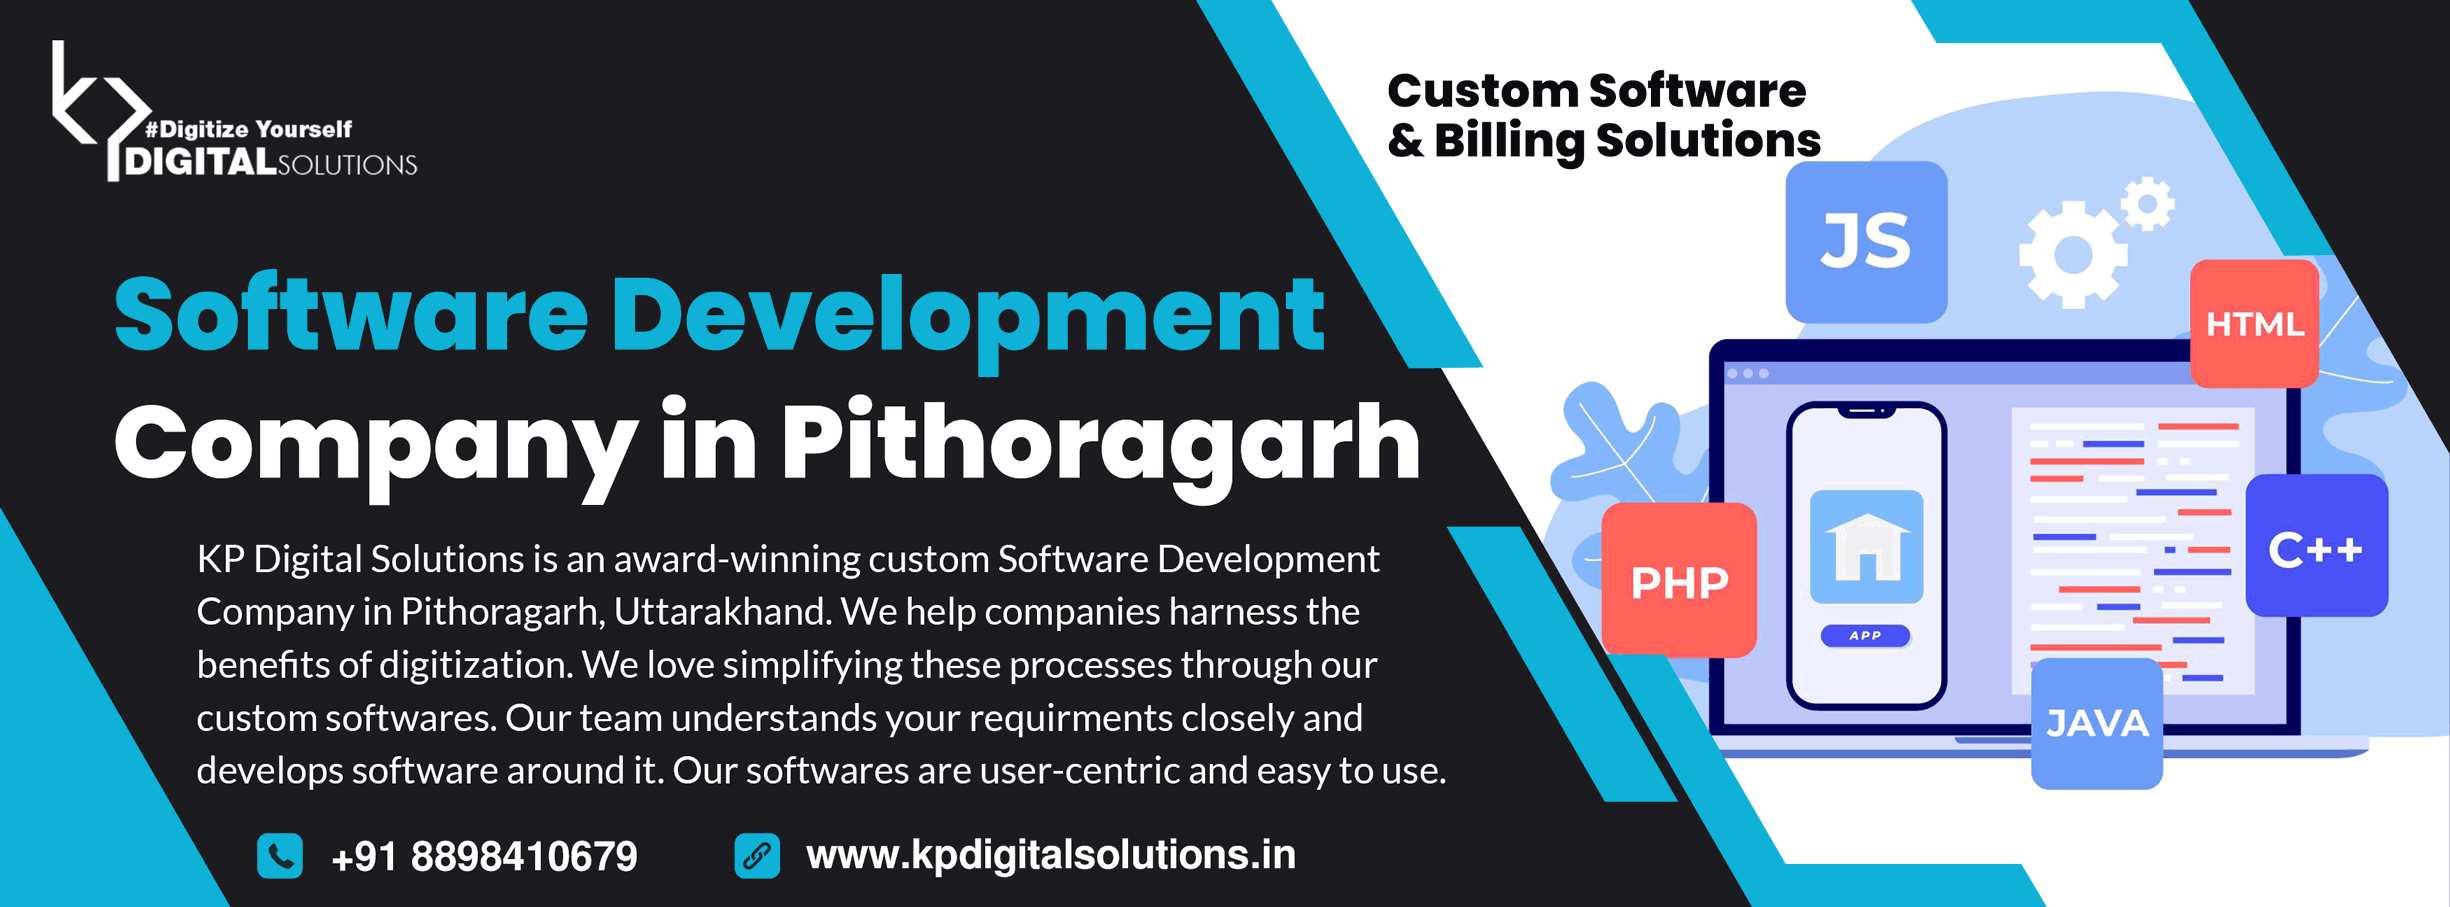 Software Development Company in Pithoragarh, Uttarakhand